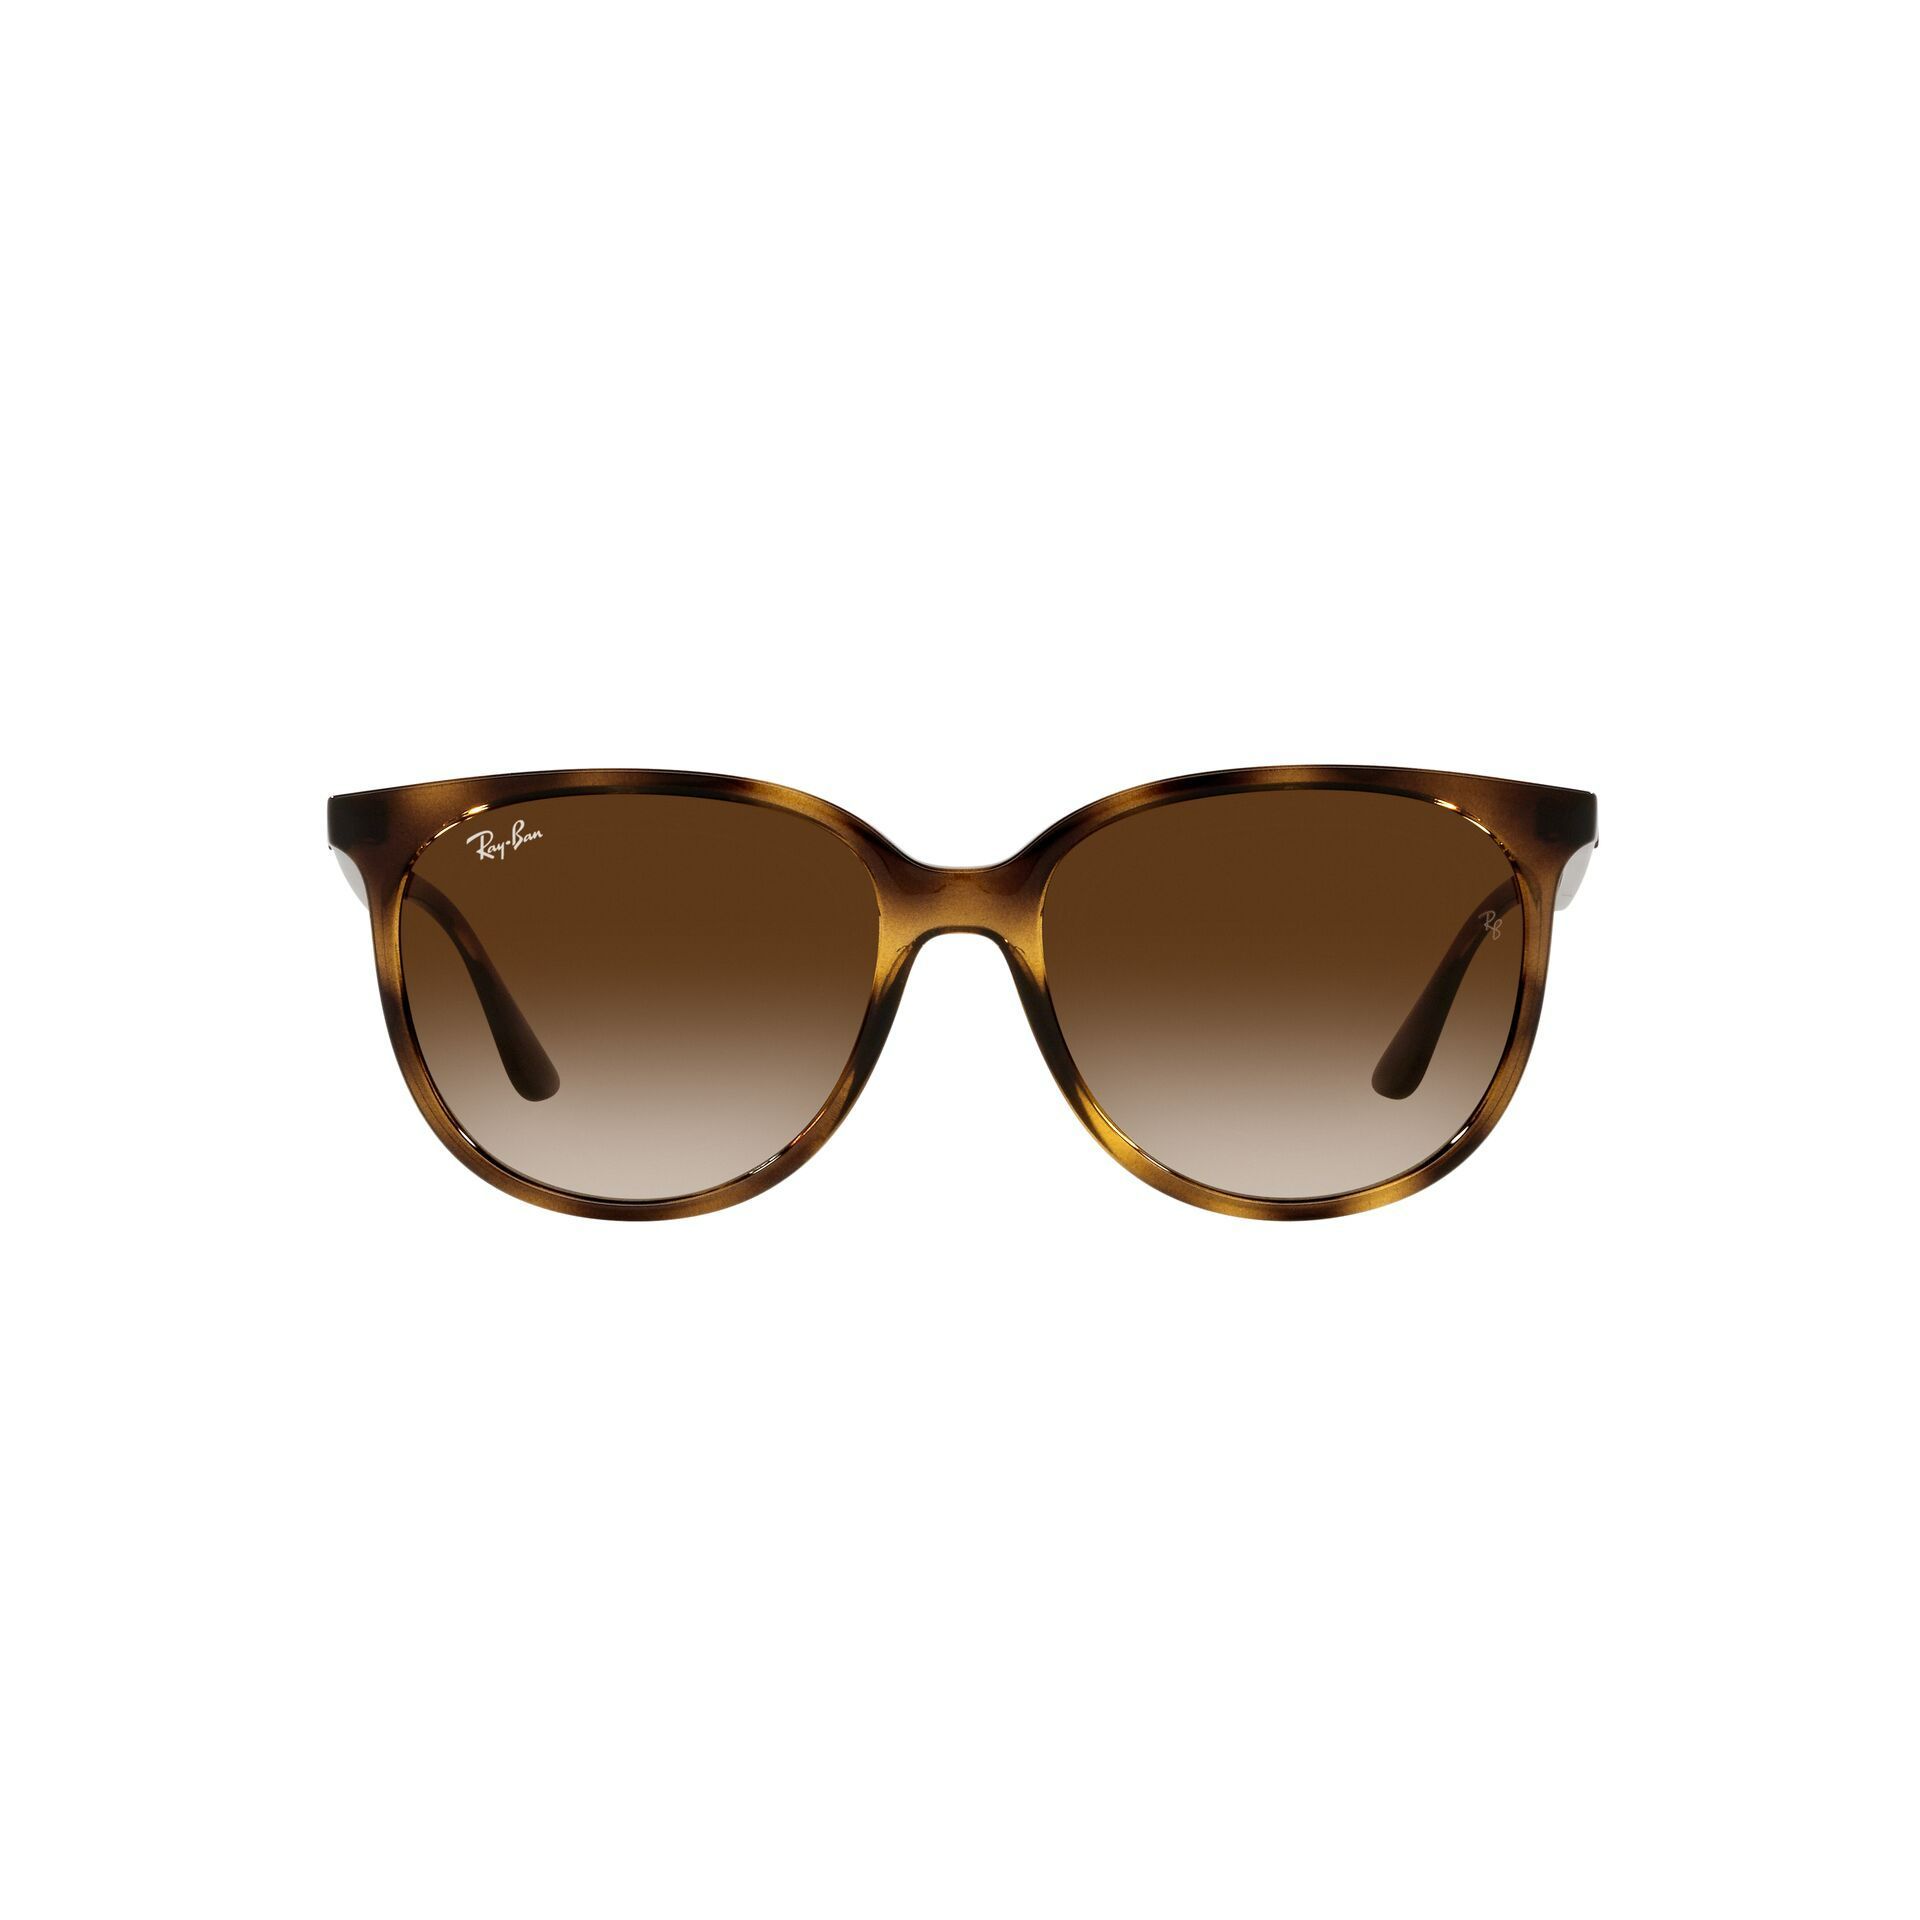 RB4378 Panthos Sunglasses 710 13 - size 54